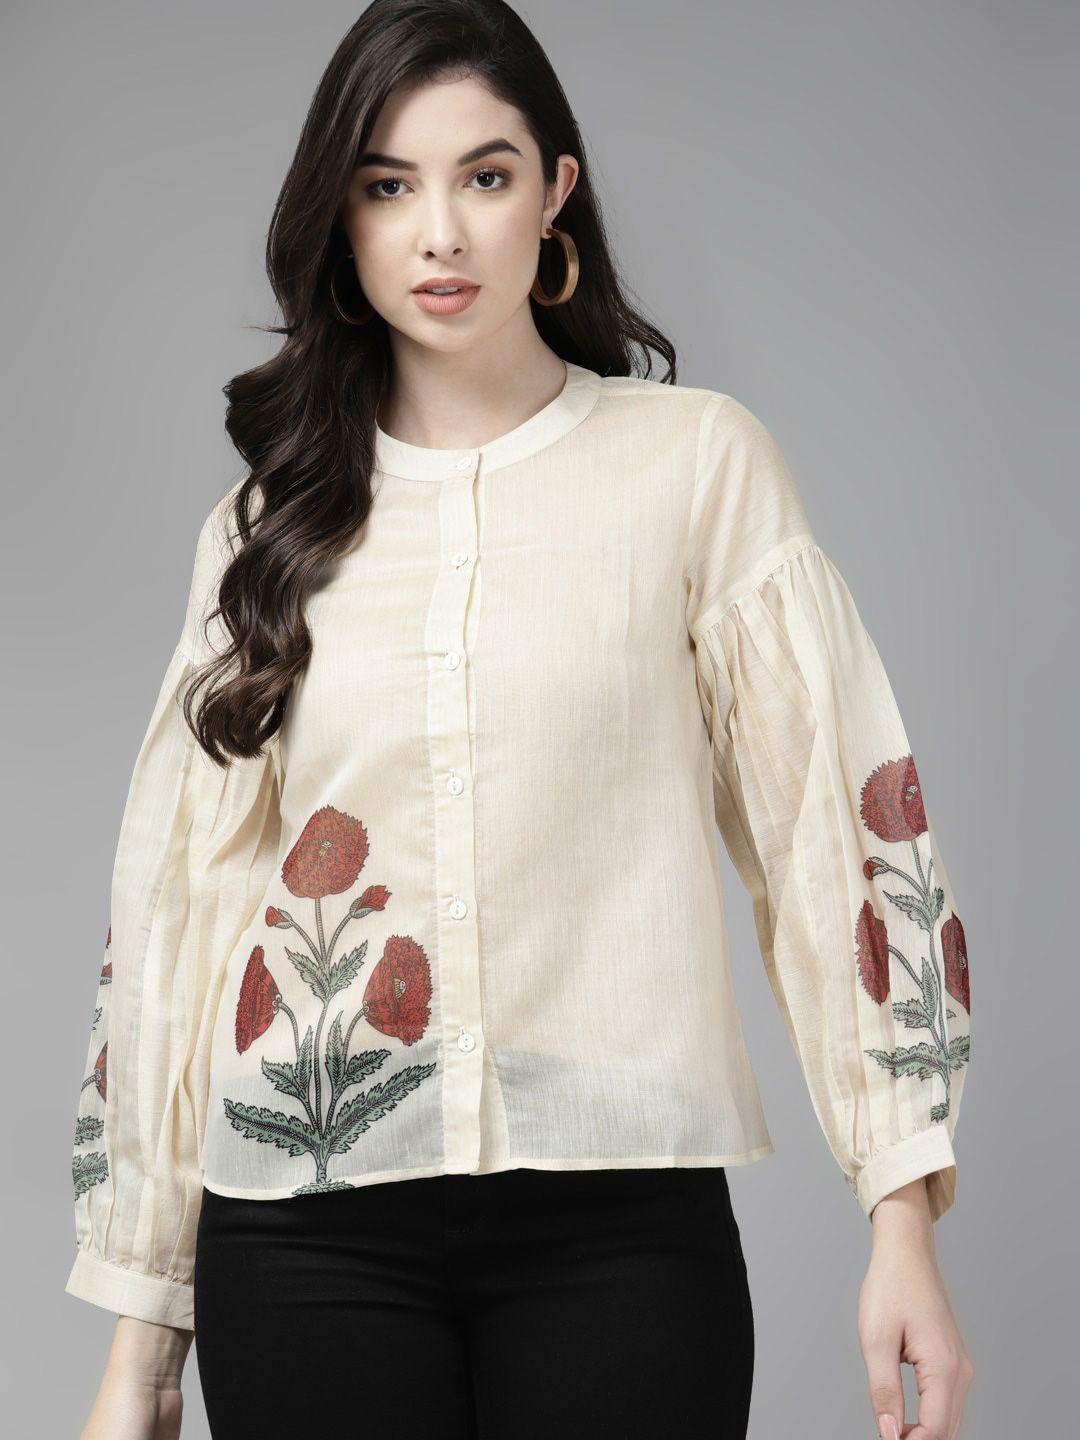 bhama couture floral printed mandarin collar shirt style top